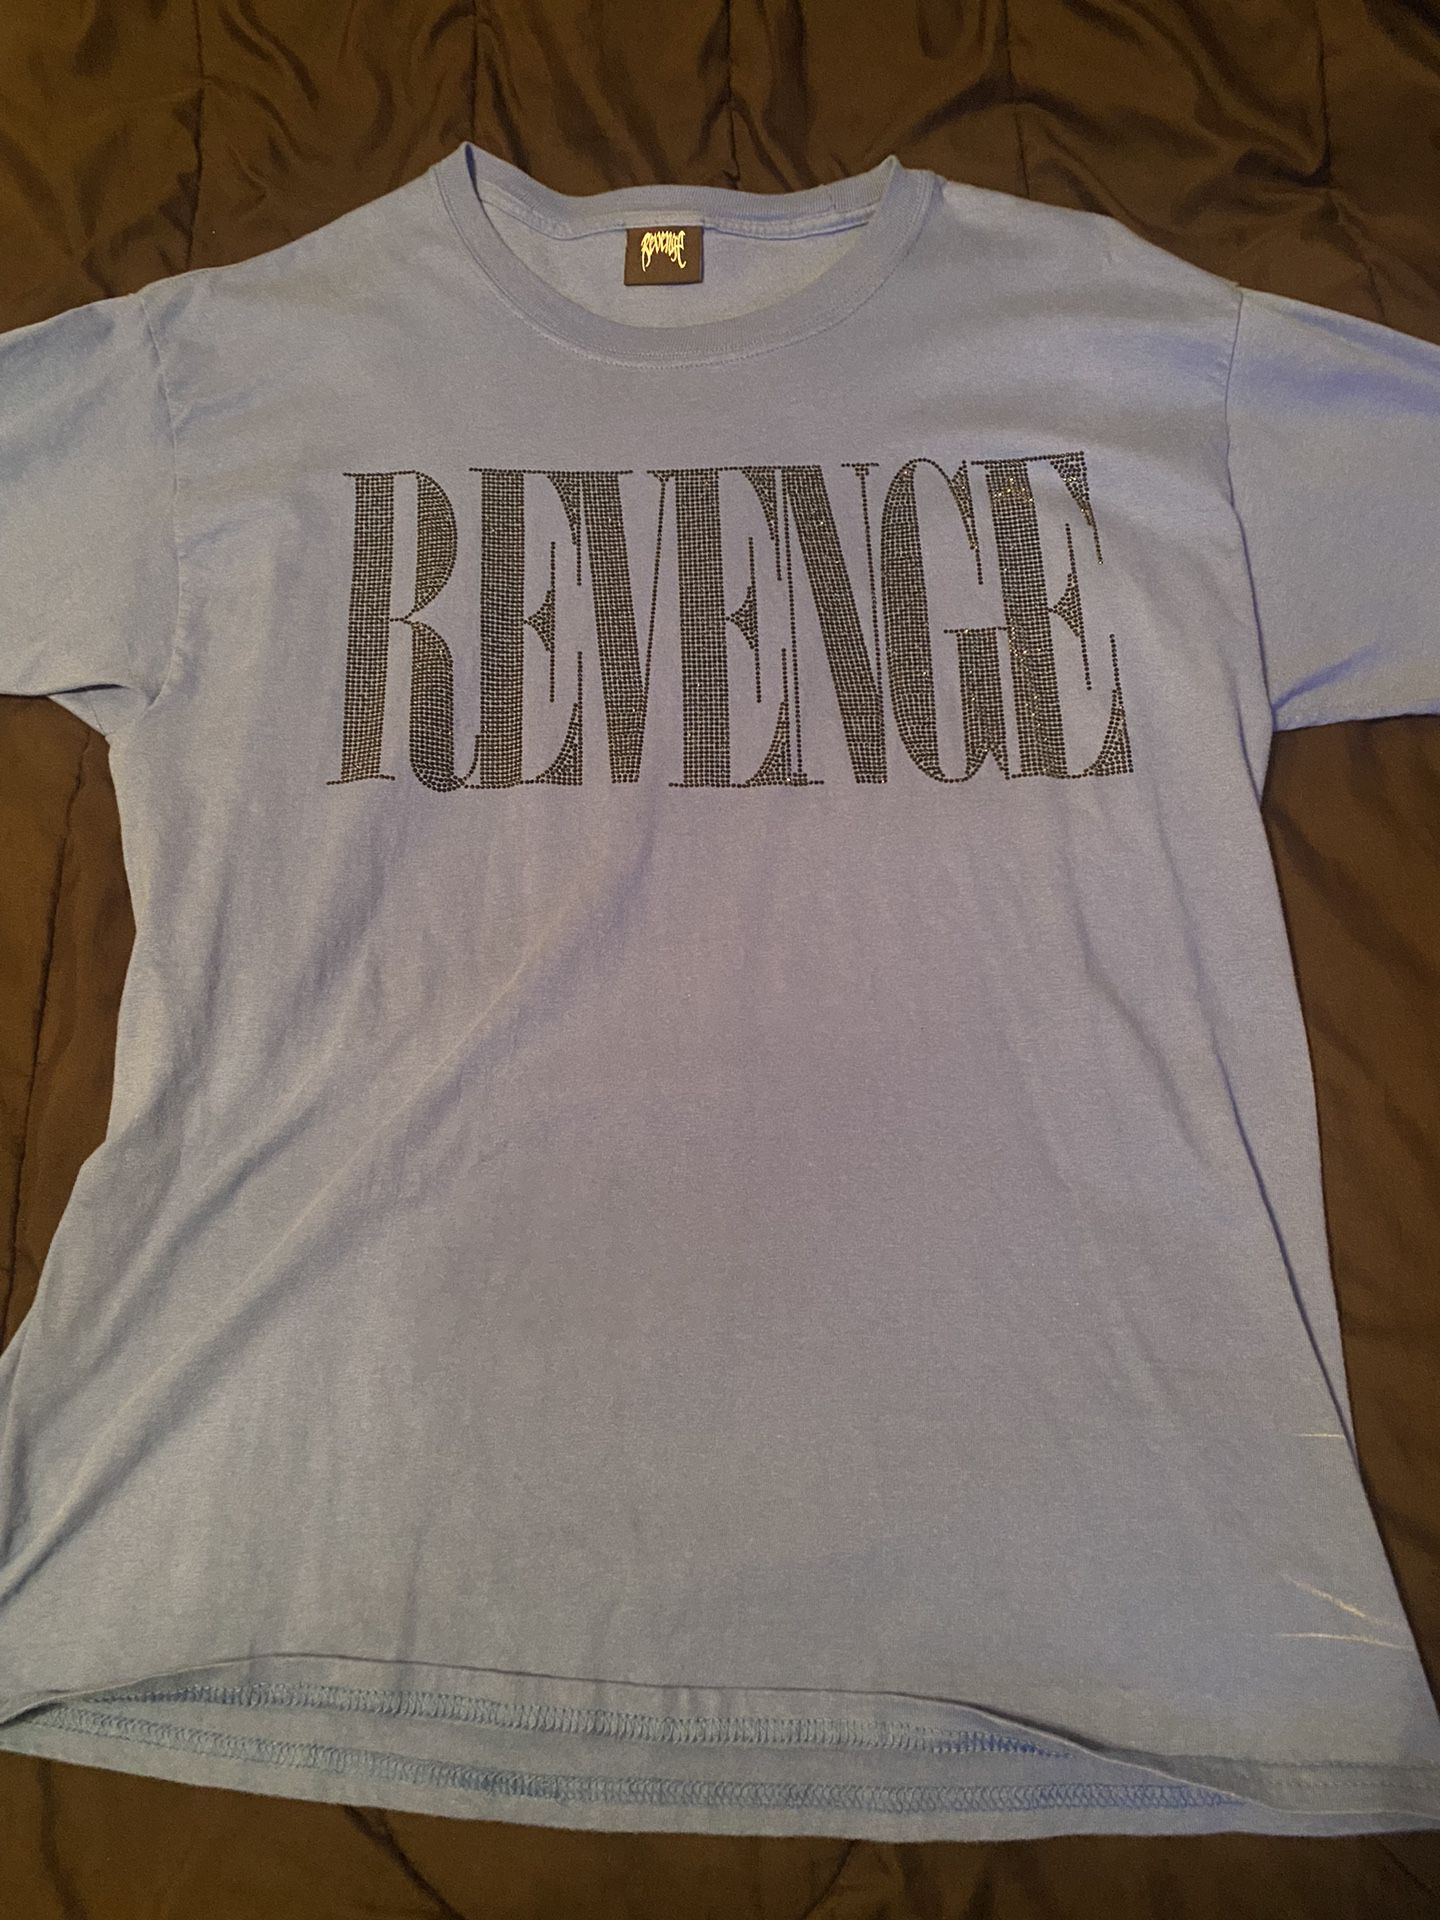 Revenge rhinestone shirt size L 